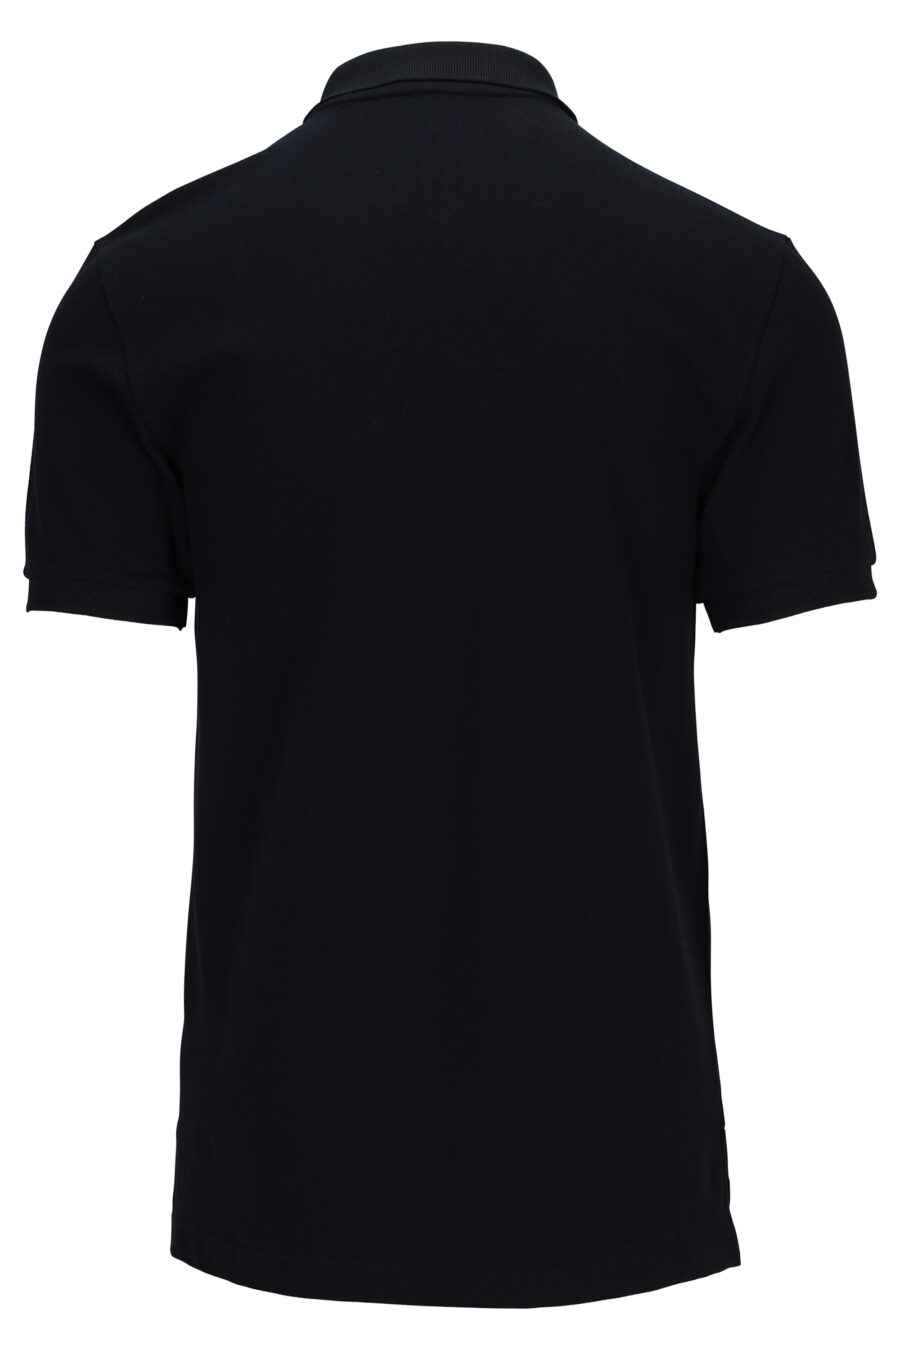 Black polo shirt with bear mini logo - 889316660906 1